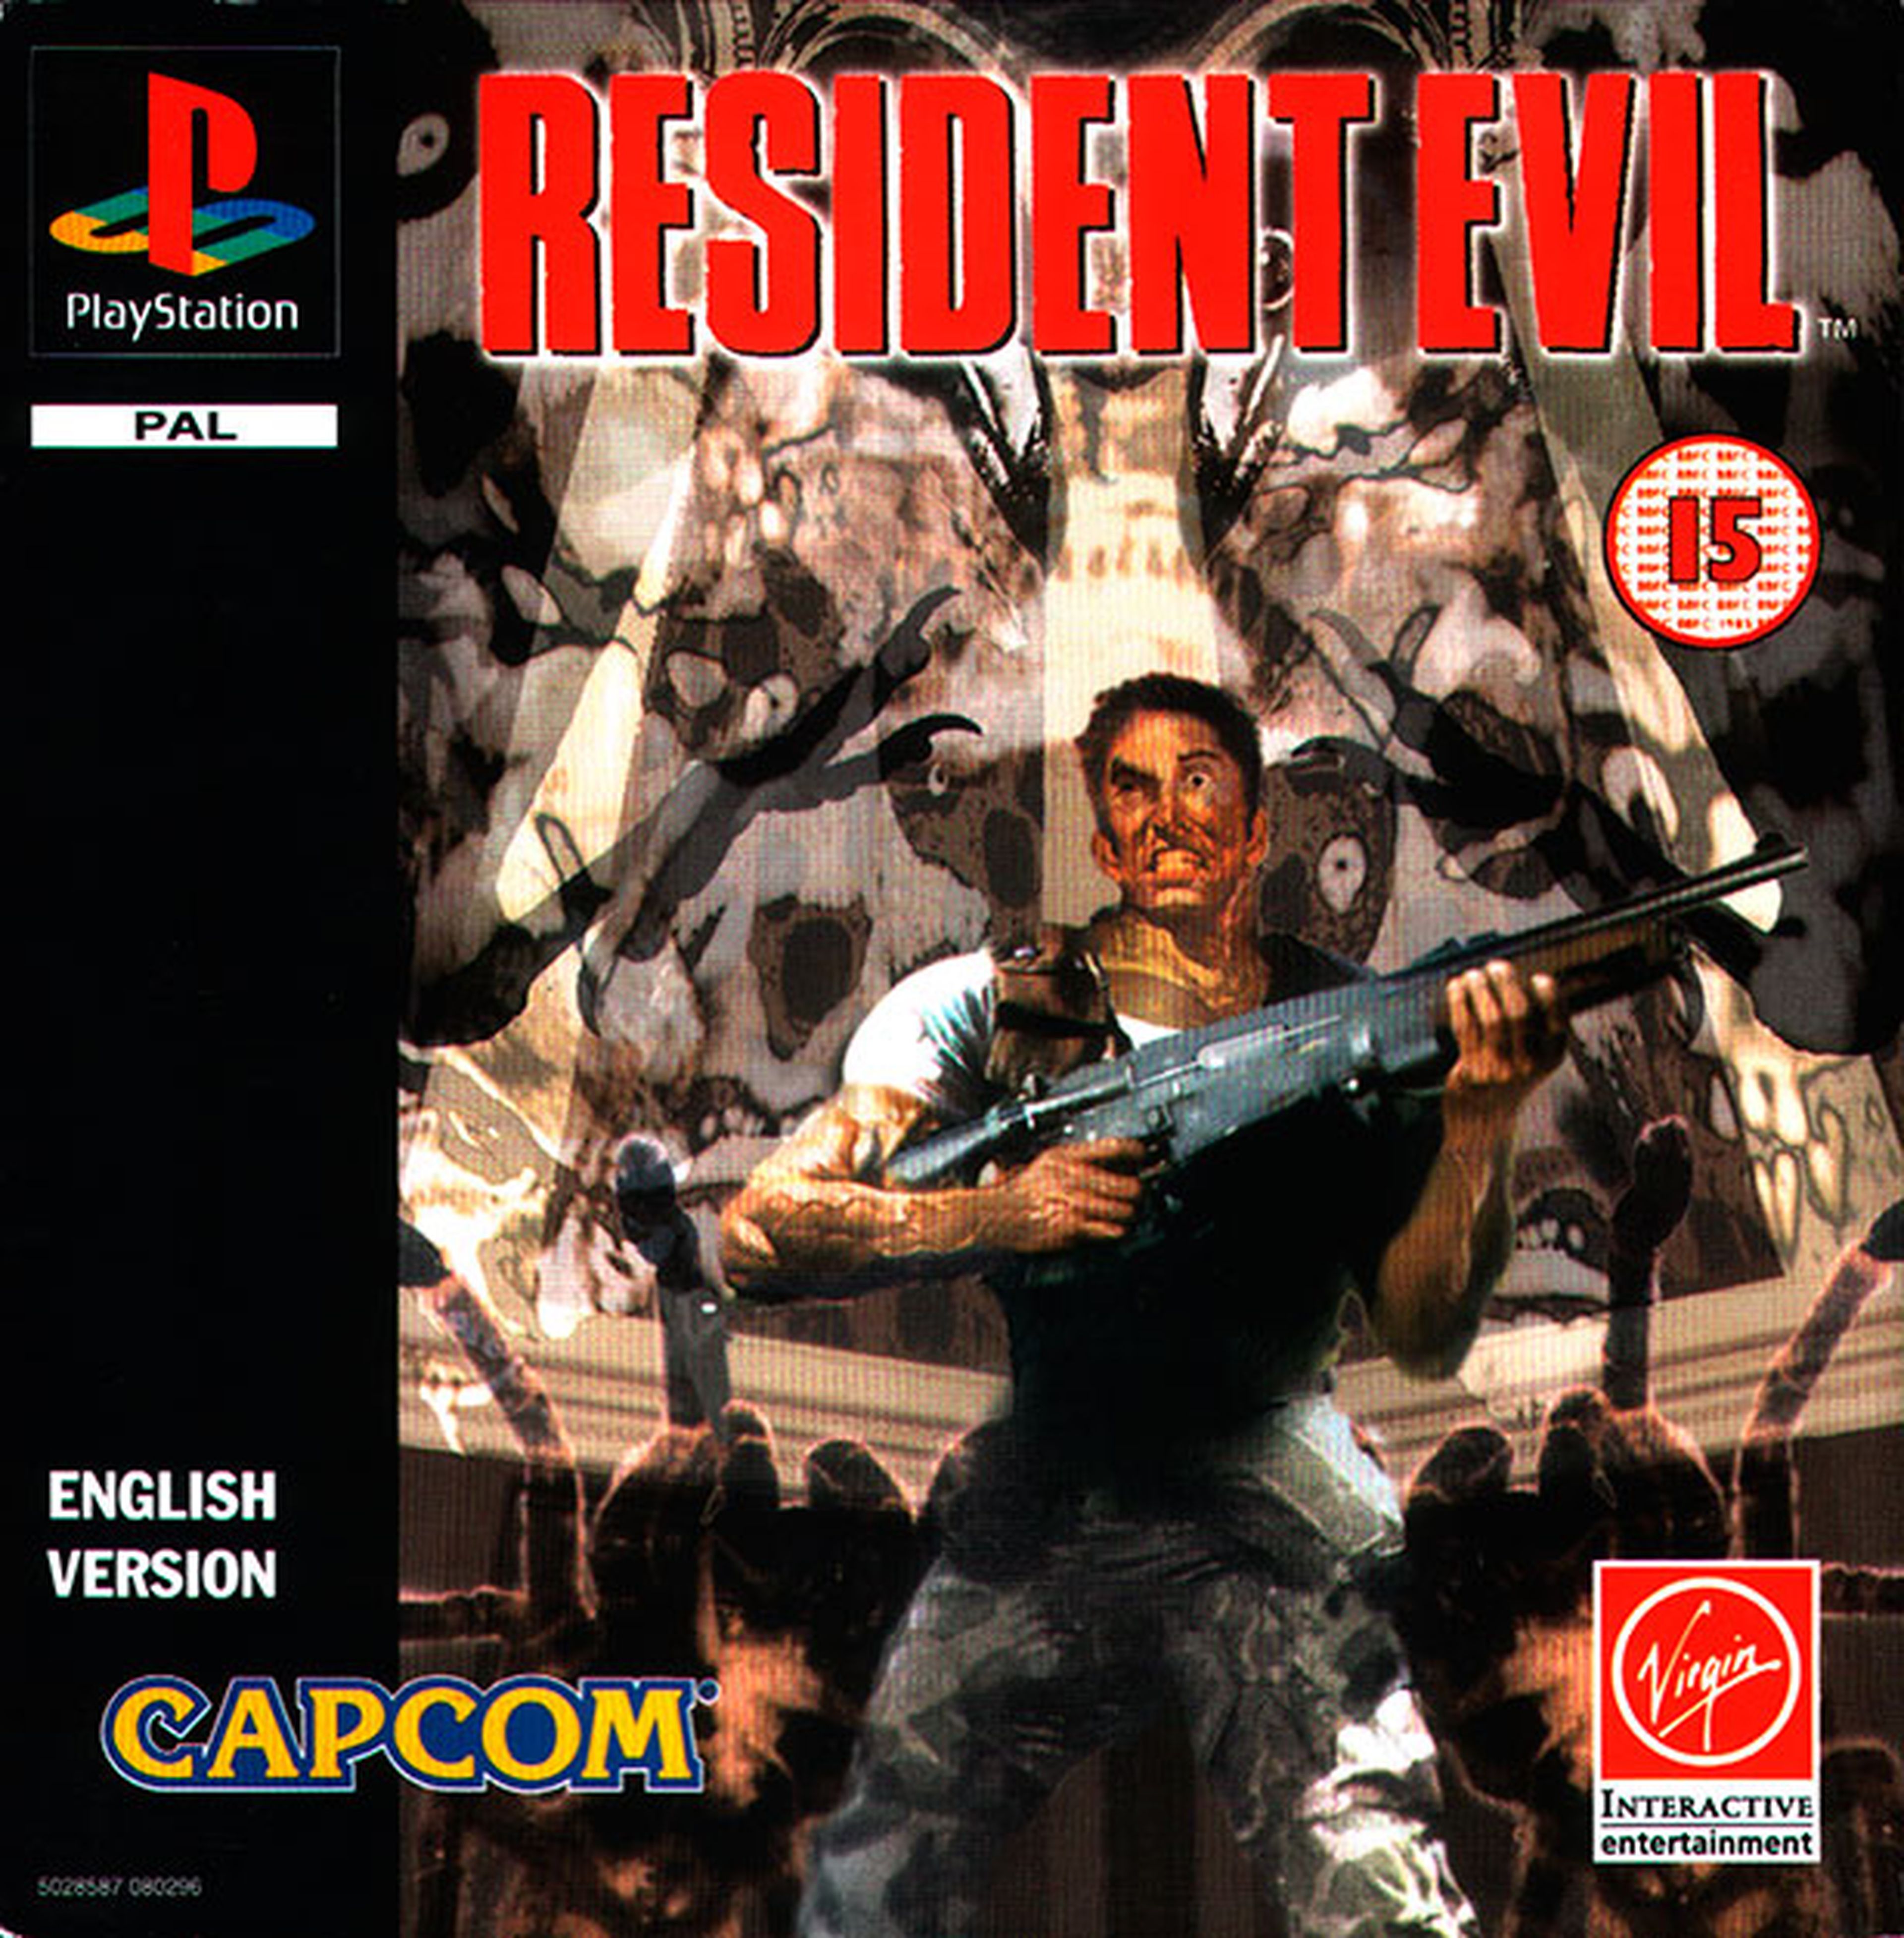 Clásicos del terror: análisis de Resident Evil